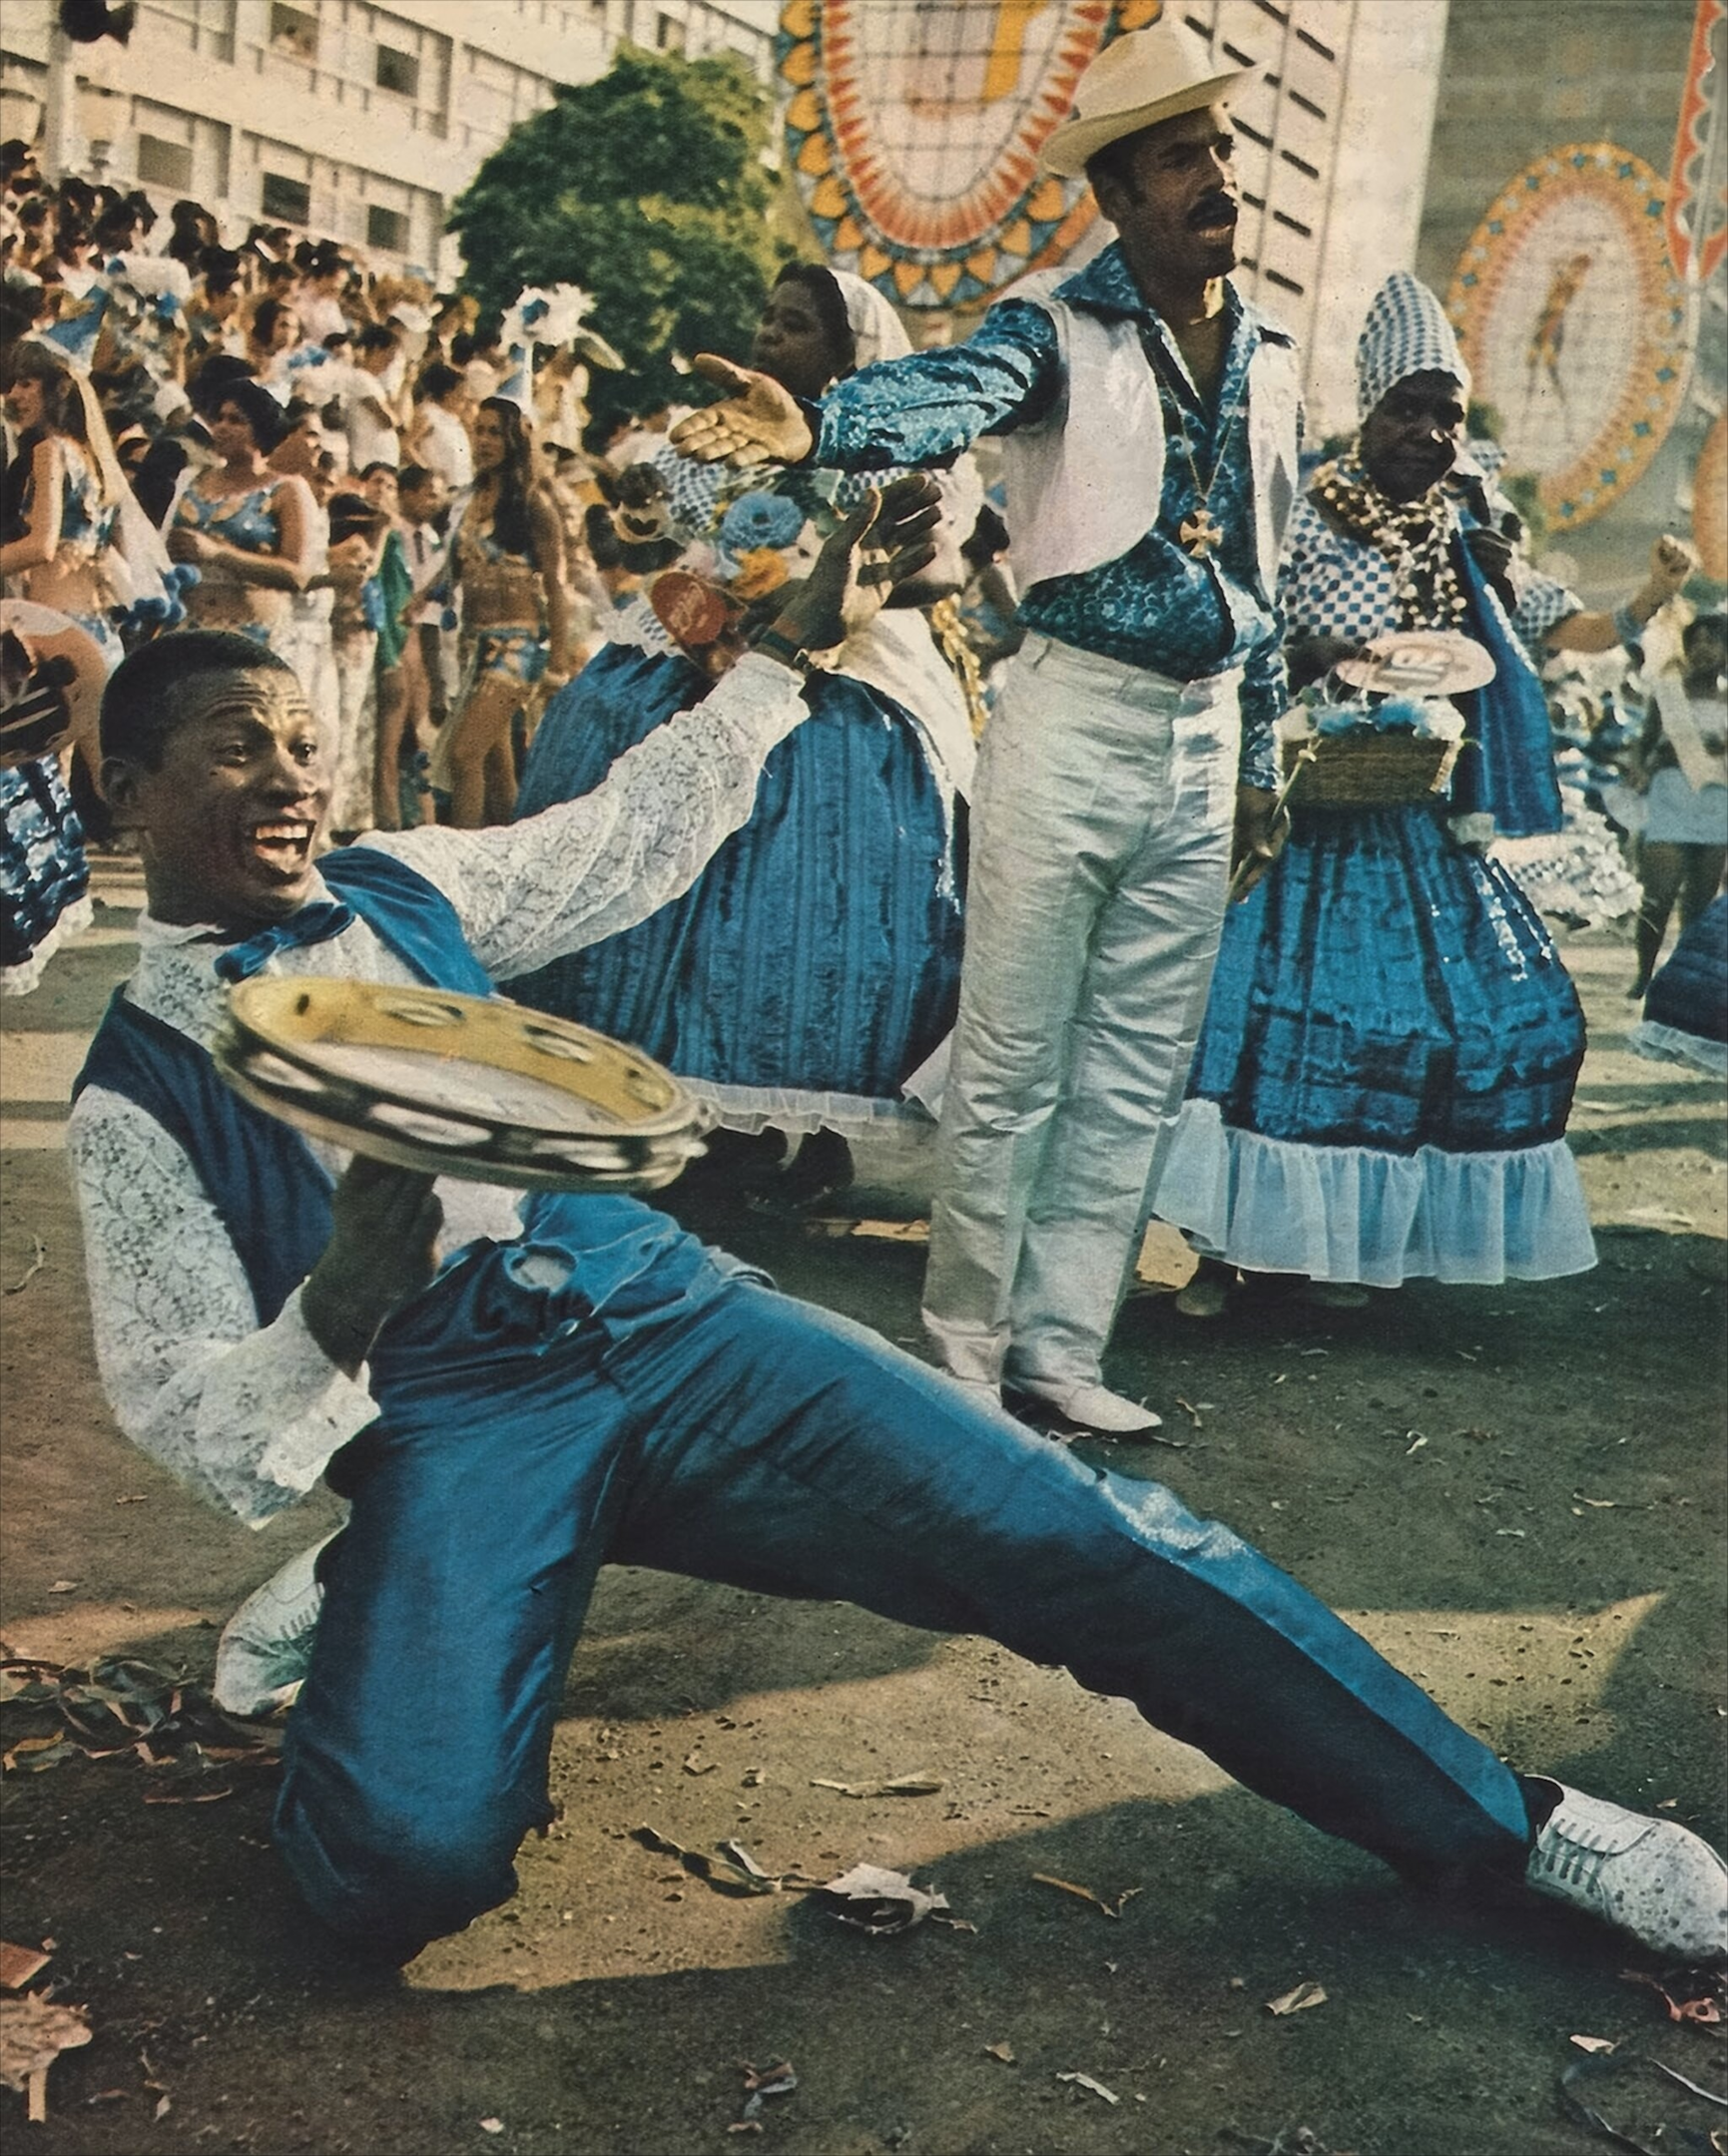 History of Brazilian Samba Costumes - Howcast